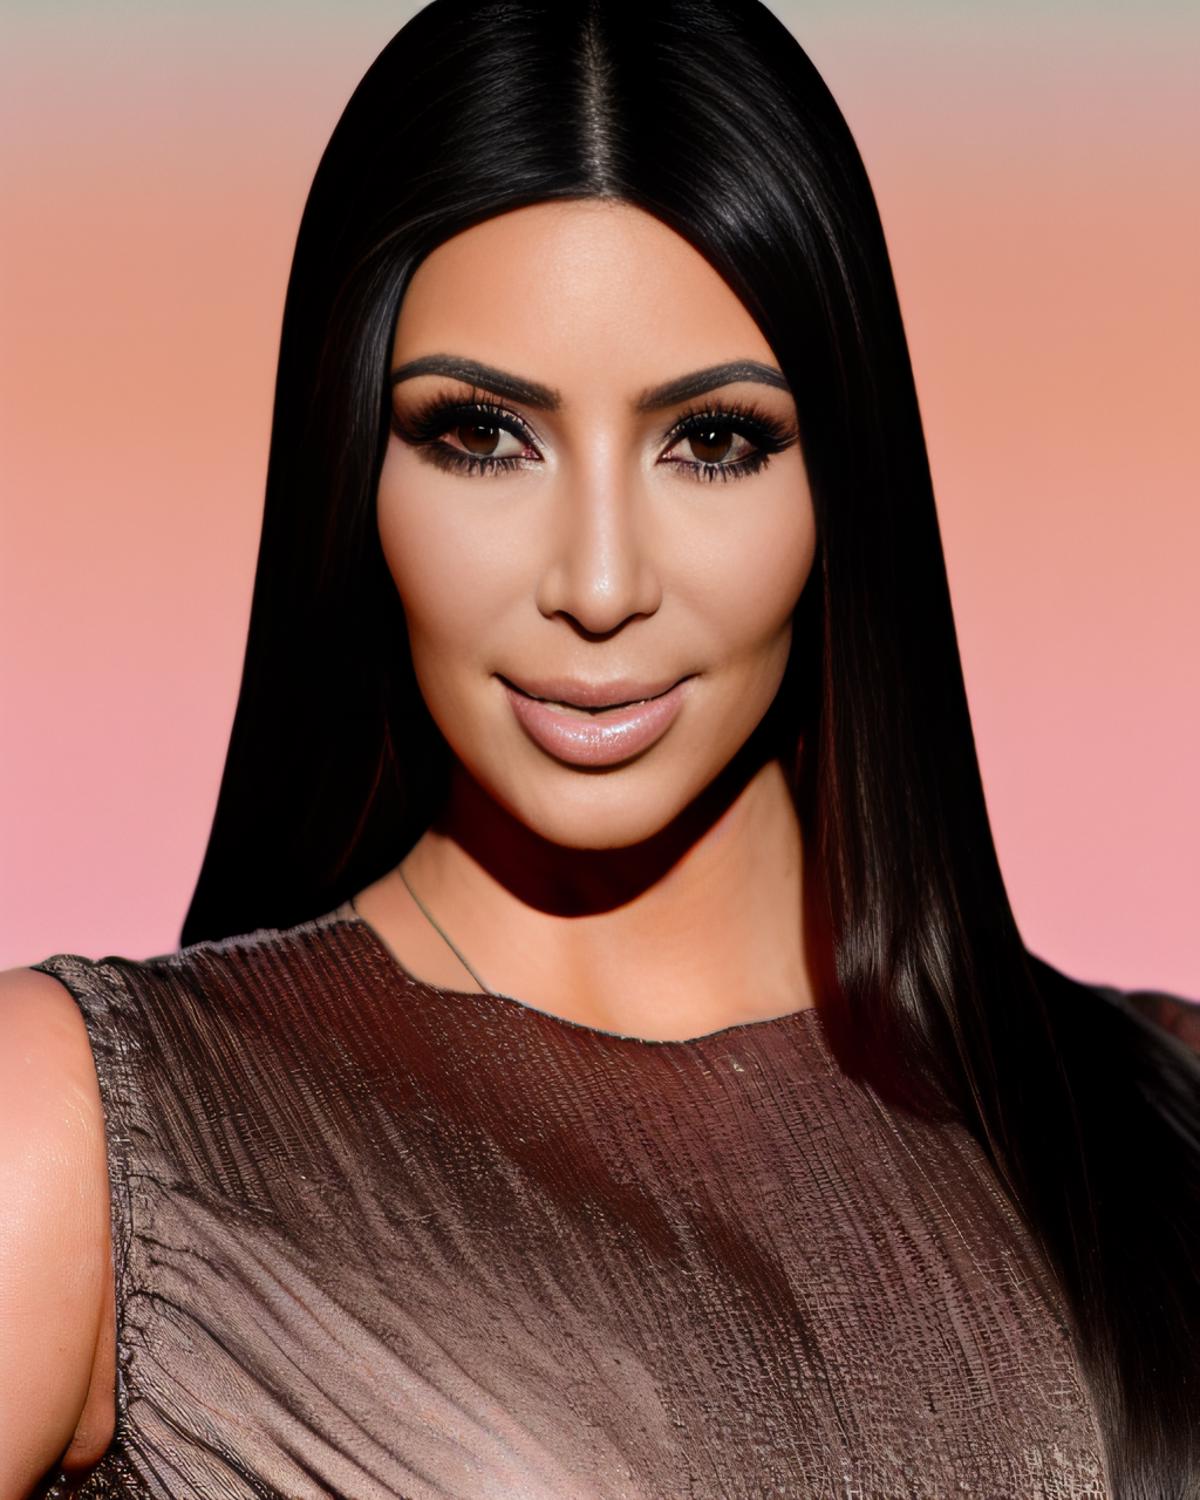 Kim Kardashian image by parar20